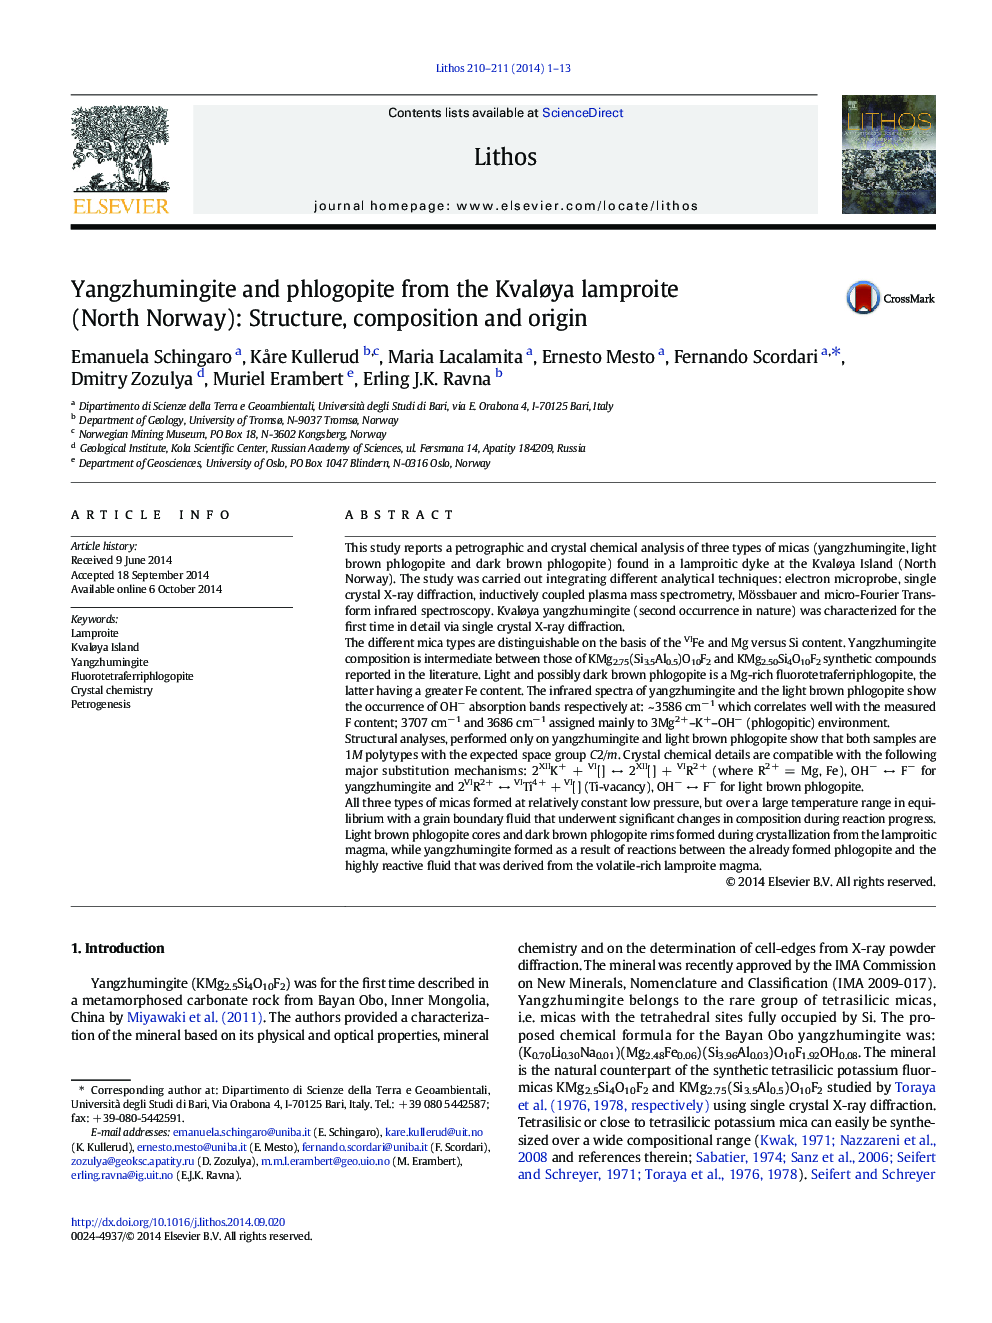 Yangzhumingite and phlogopite from the Kvaløya lamproite (North Norway): Structure, composition and origin